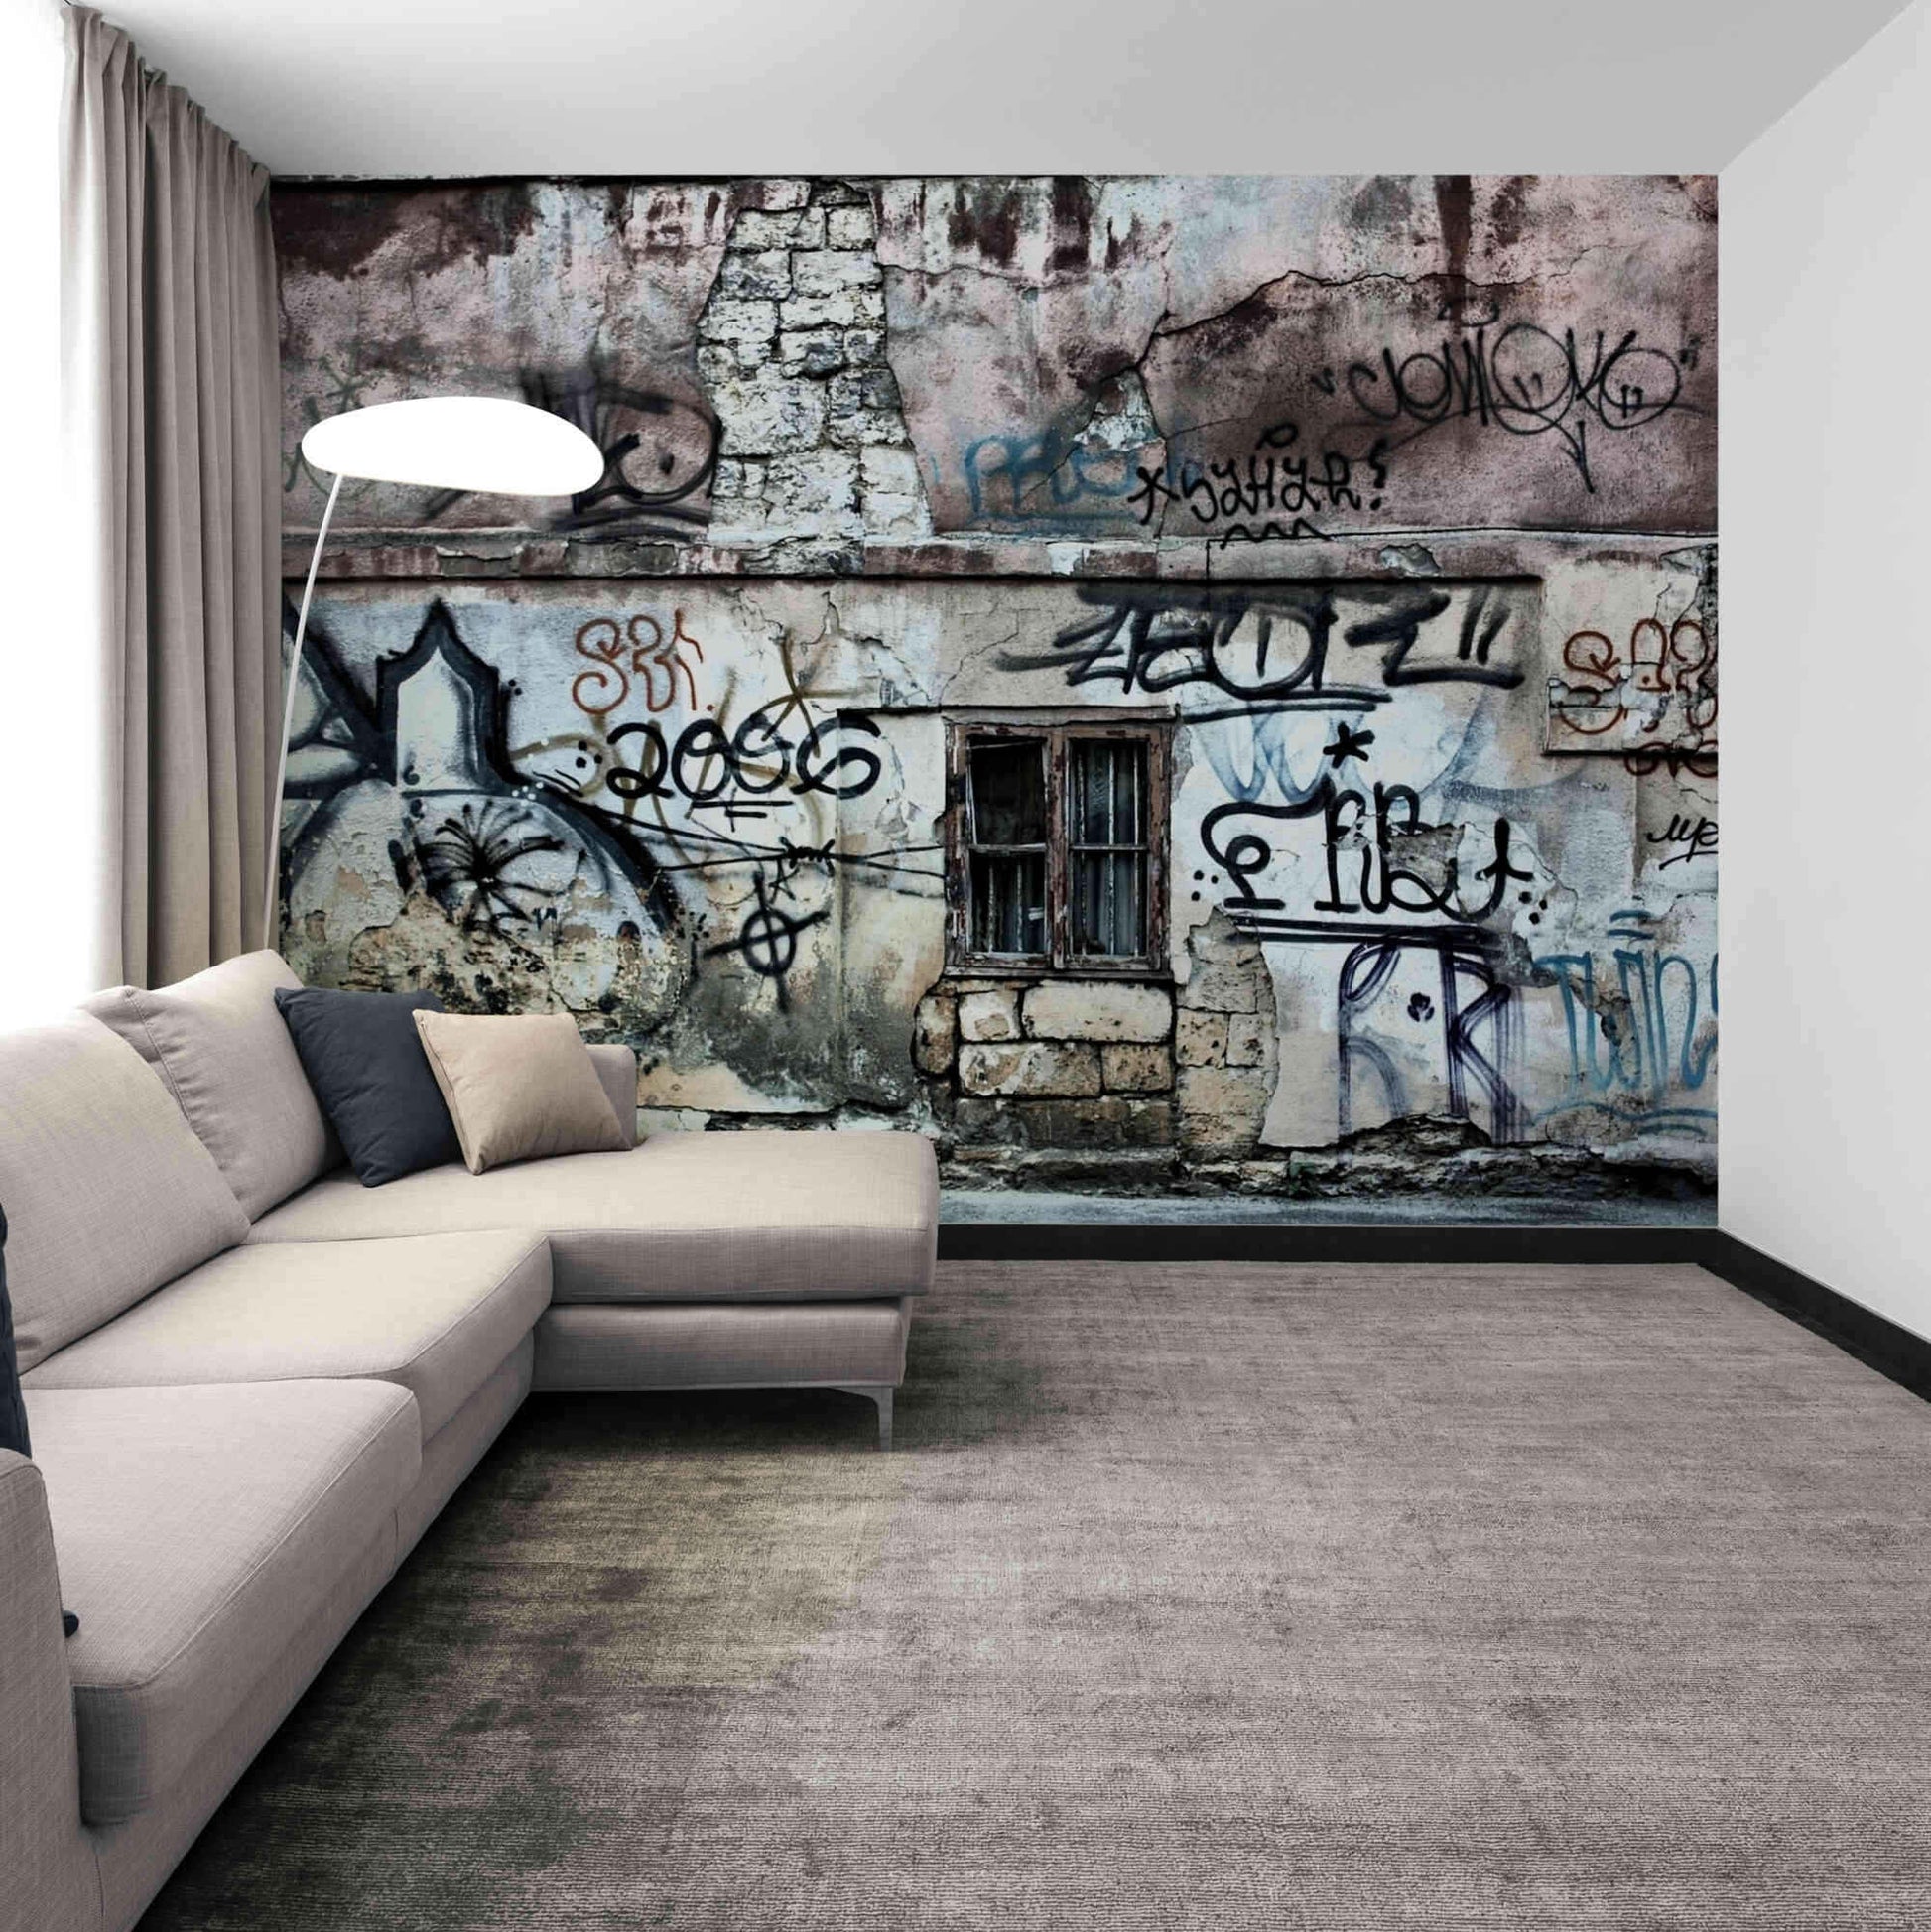 Aged Graffiti Wall" wallpaper showcasing vibrant street art for dynamic interior design.